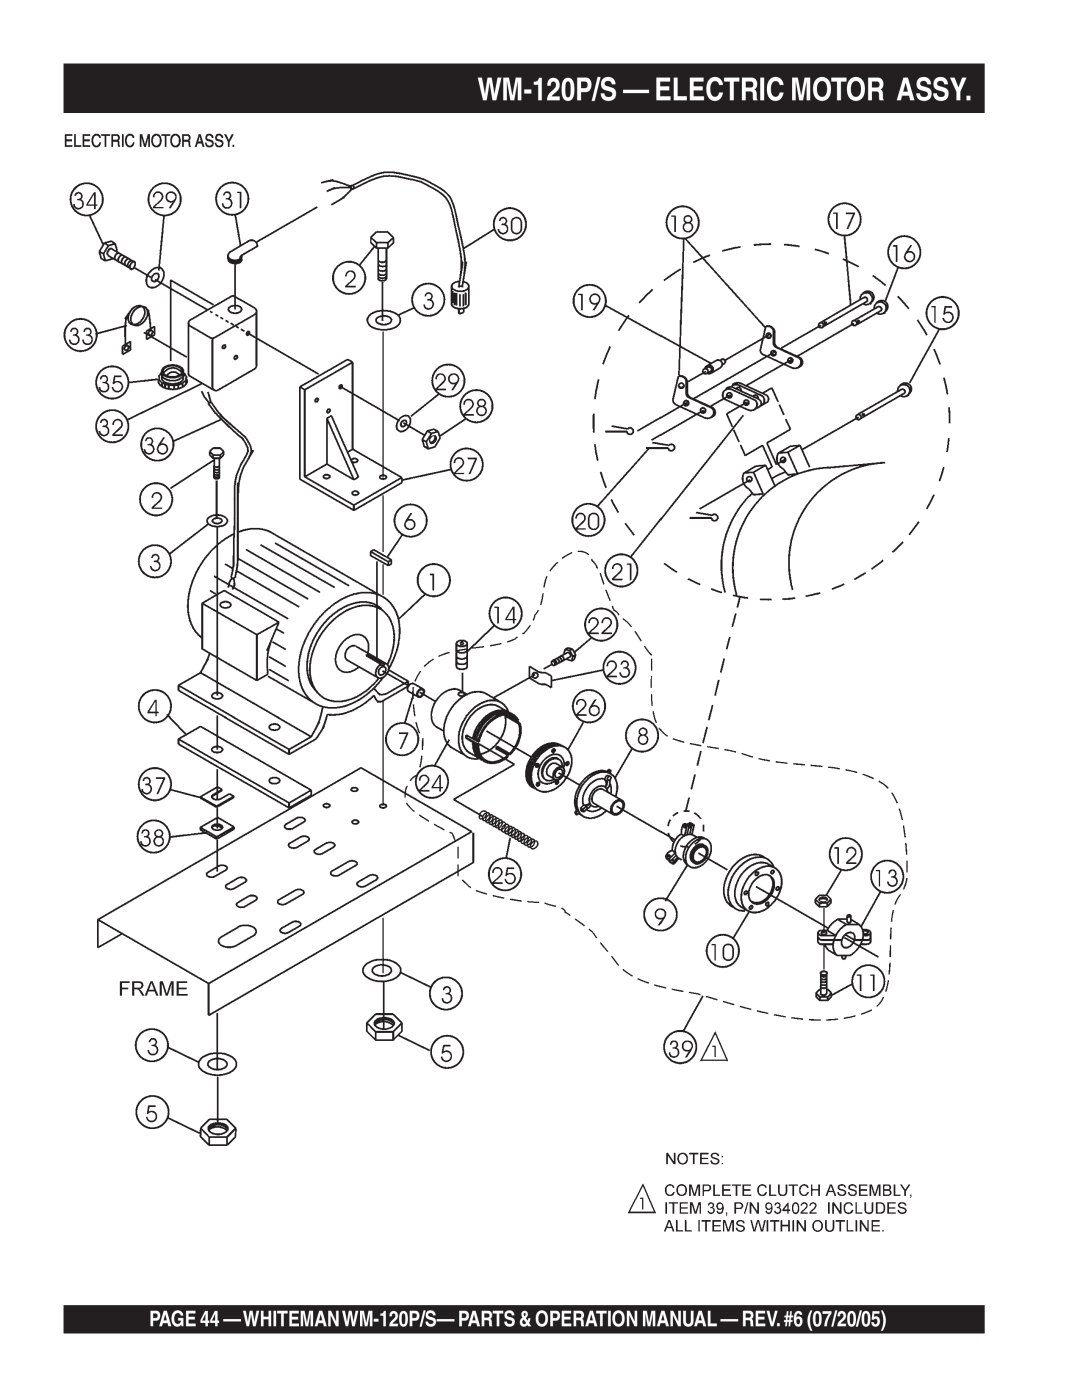 Multiquip WM-120PM operation manual WM-120P/S - ELECTRIC MOTOR ASSY, Electric Motor Assy 